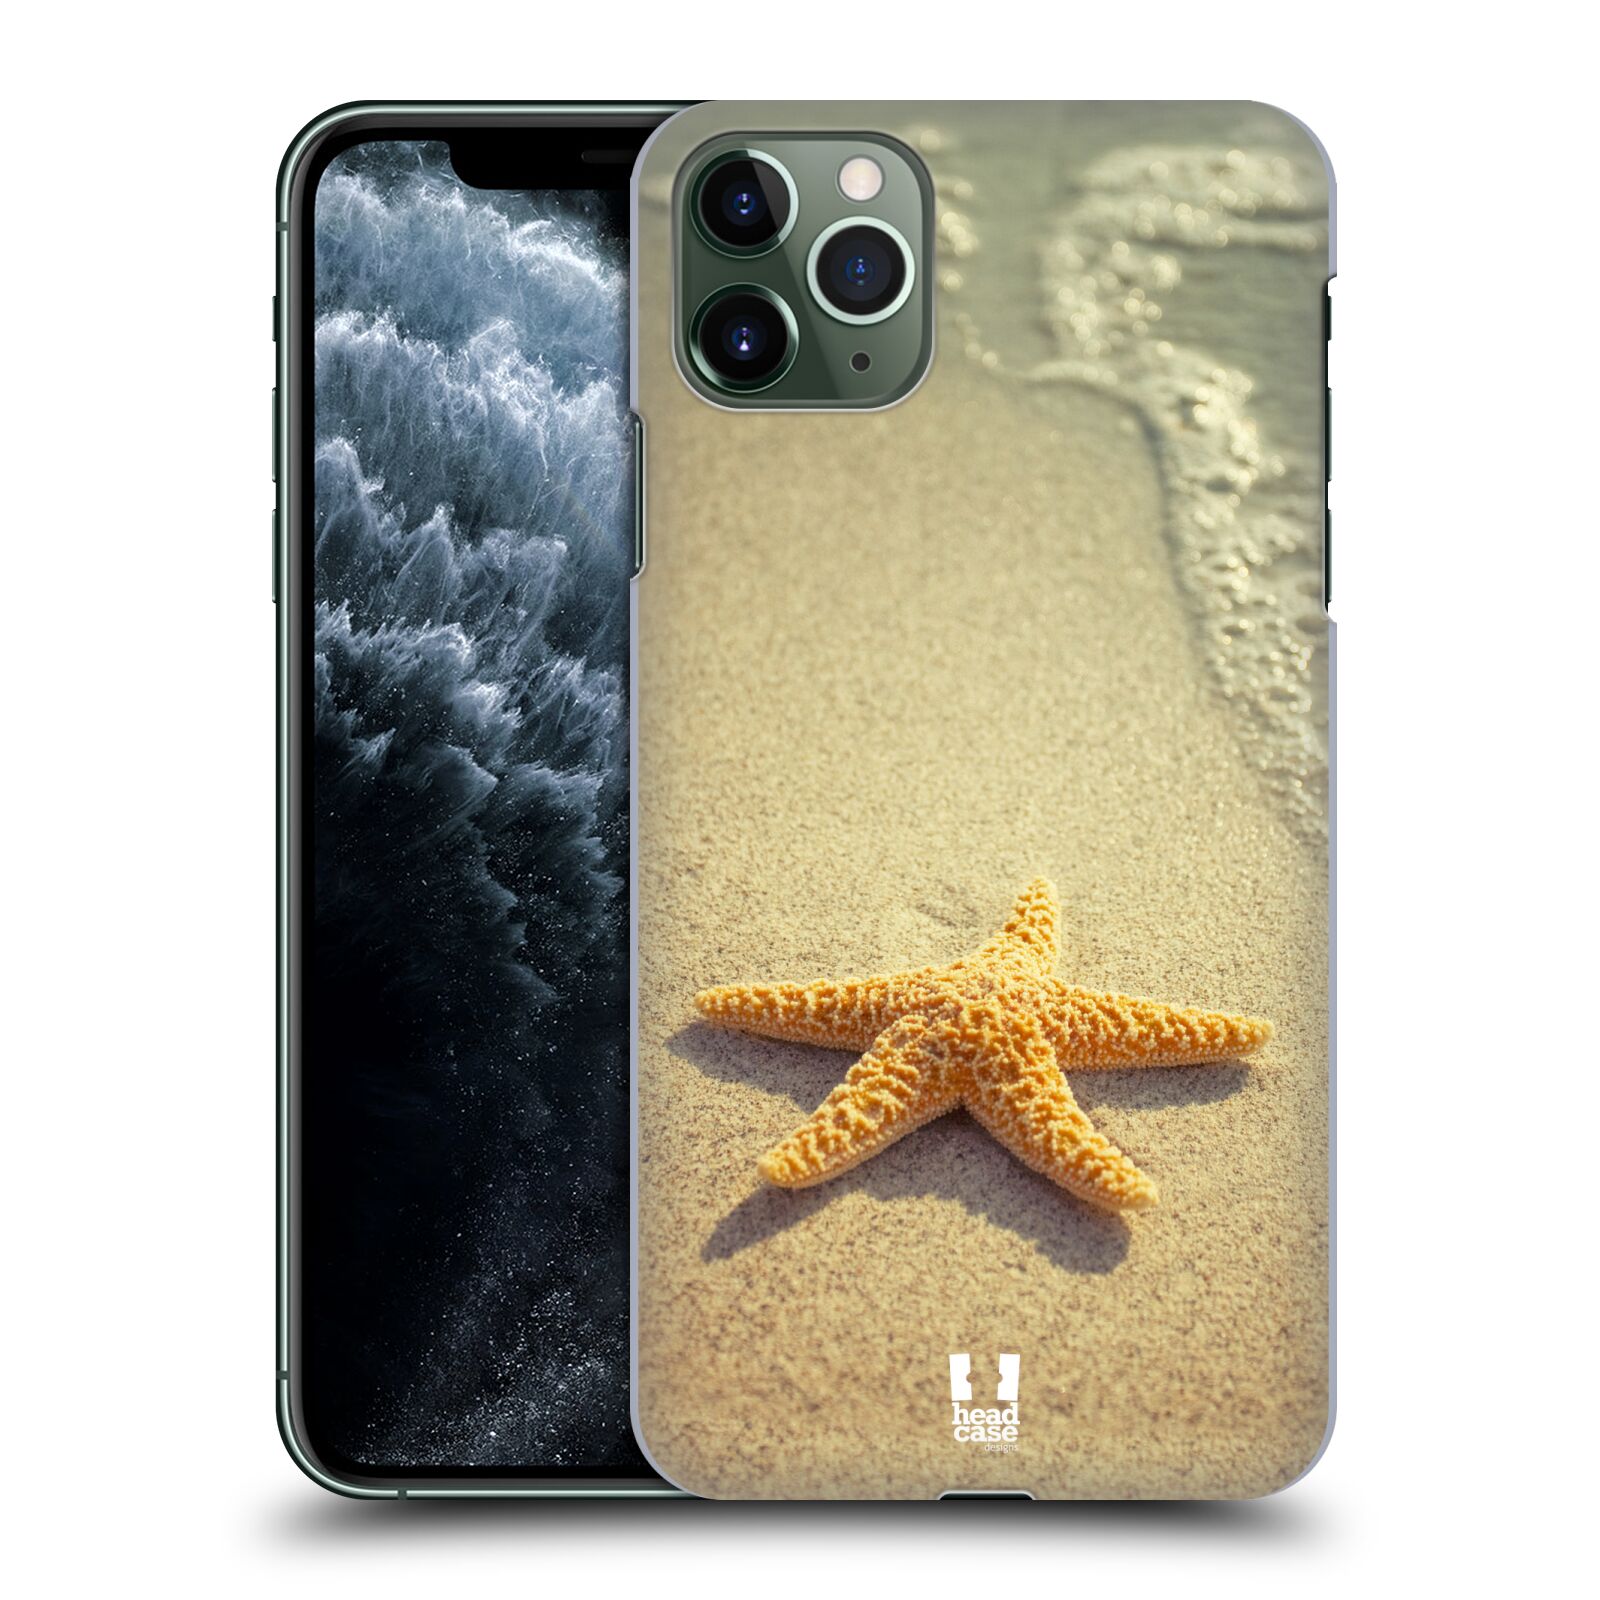 Pouzdro na mobil Apple Iphone 11 PRO MAX - HEAD CASE - vzor slavná zvířata foto hvězda na břehu